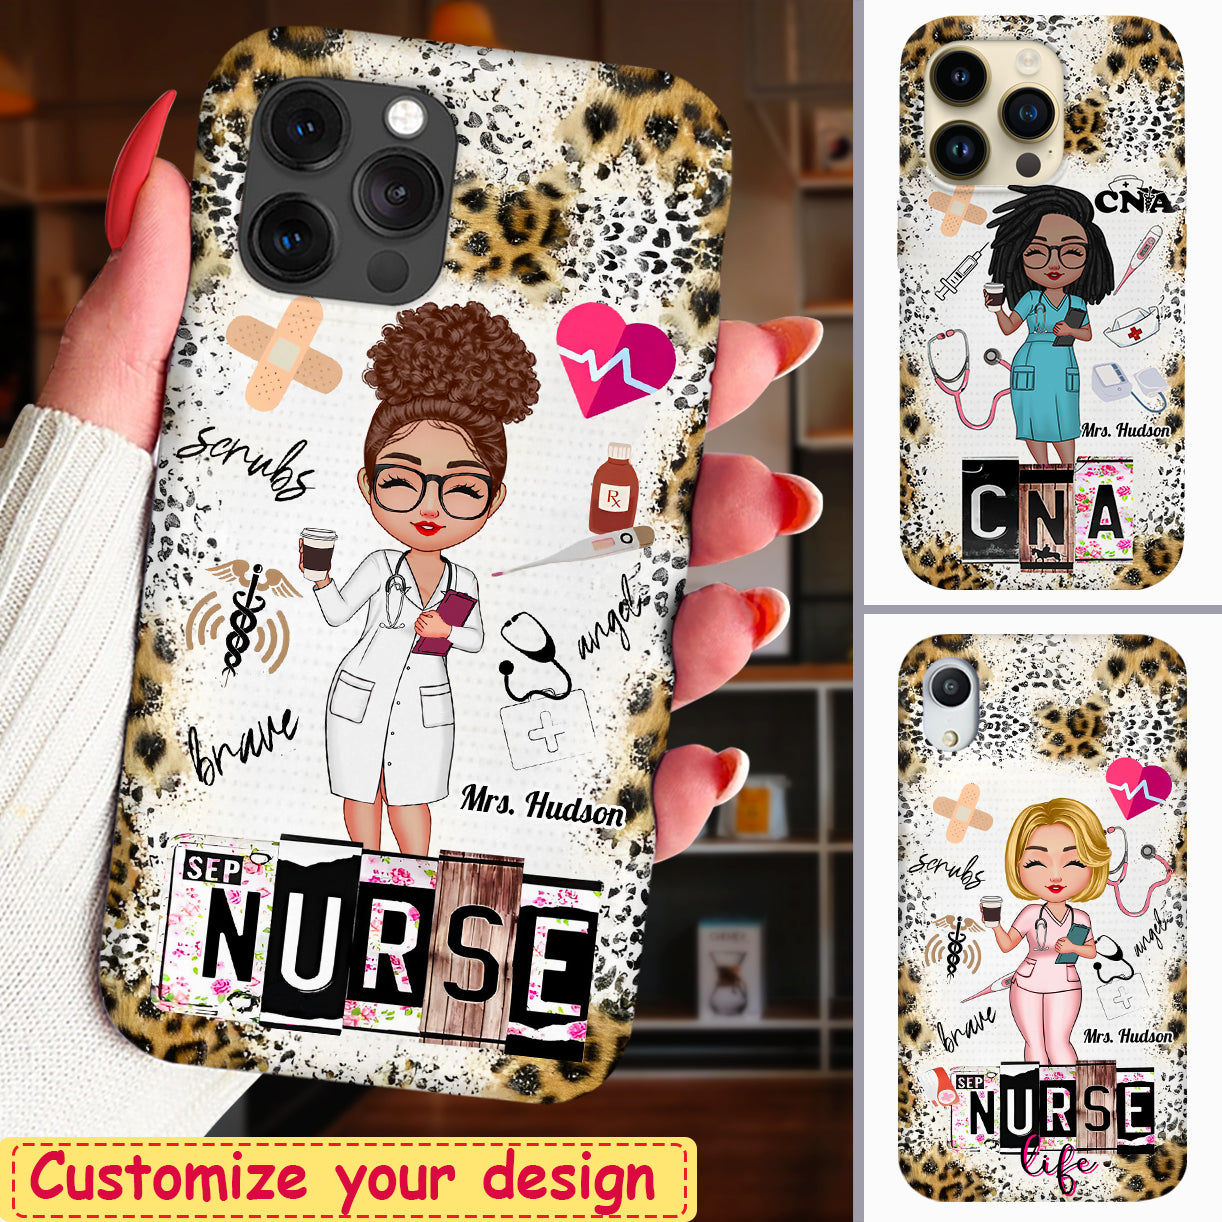 Nurse, CNA, CMA, Doctor - Nurse Life Scrubs Nurse Day Personalized Phone case